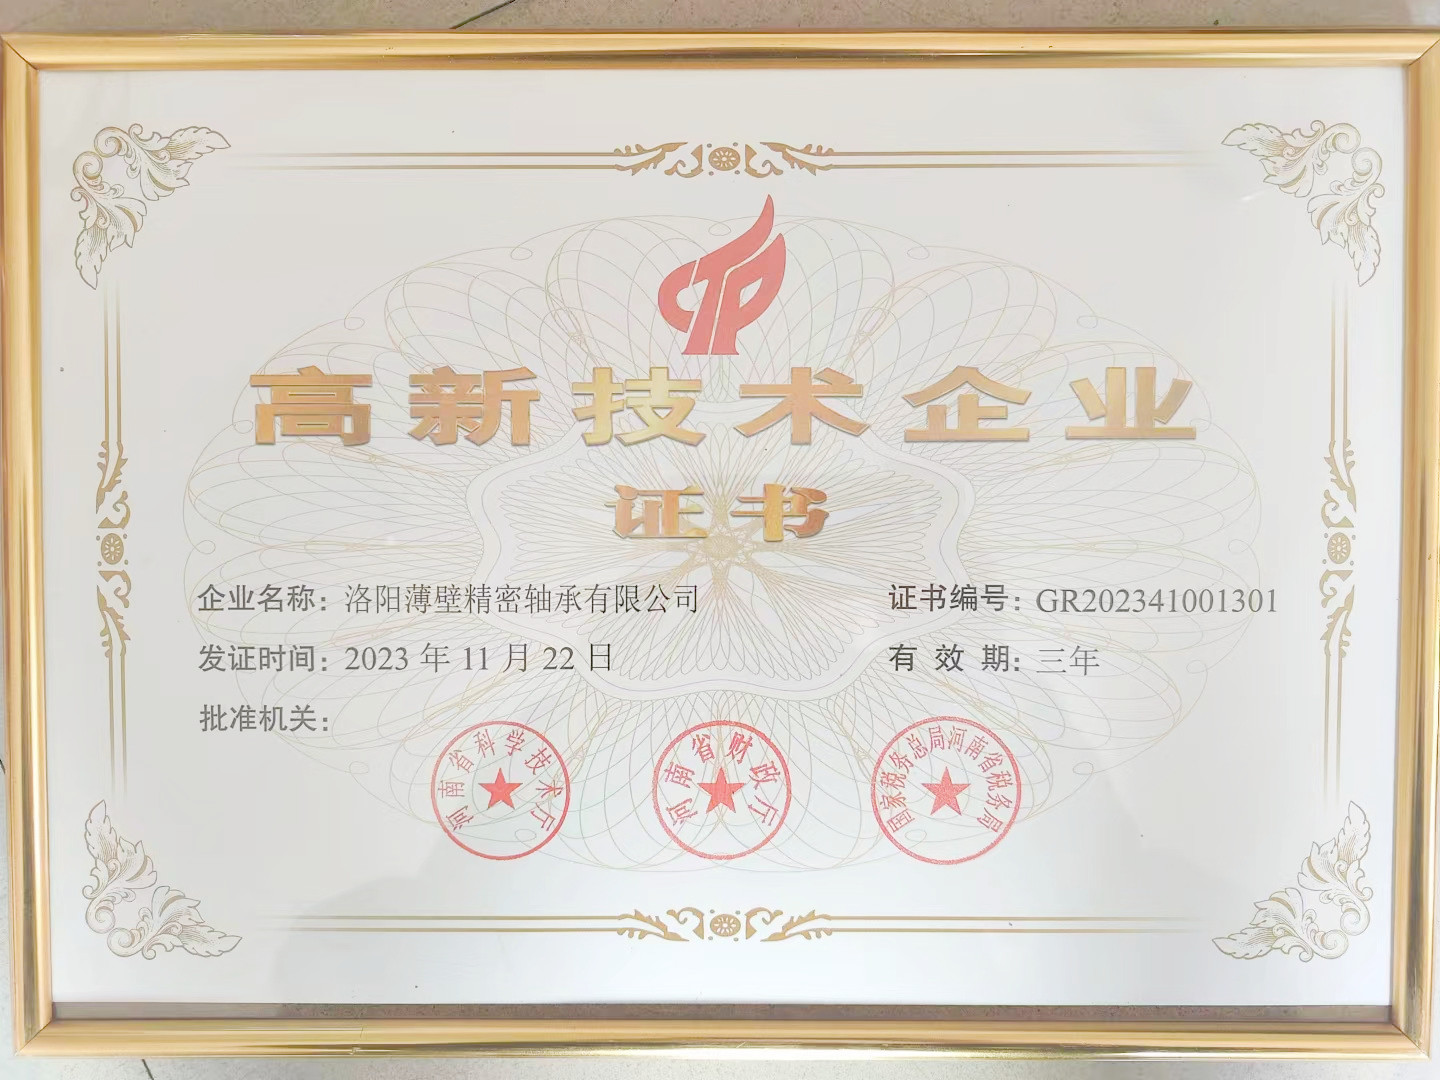 BOBI Bearing Co.,Ltd Was Awarded The High-Tech Enterprise Certificate